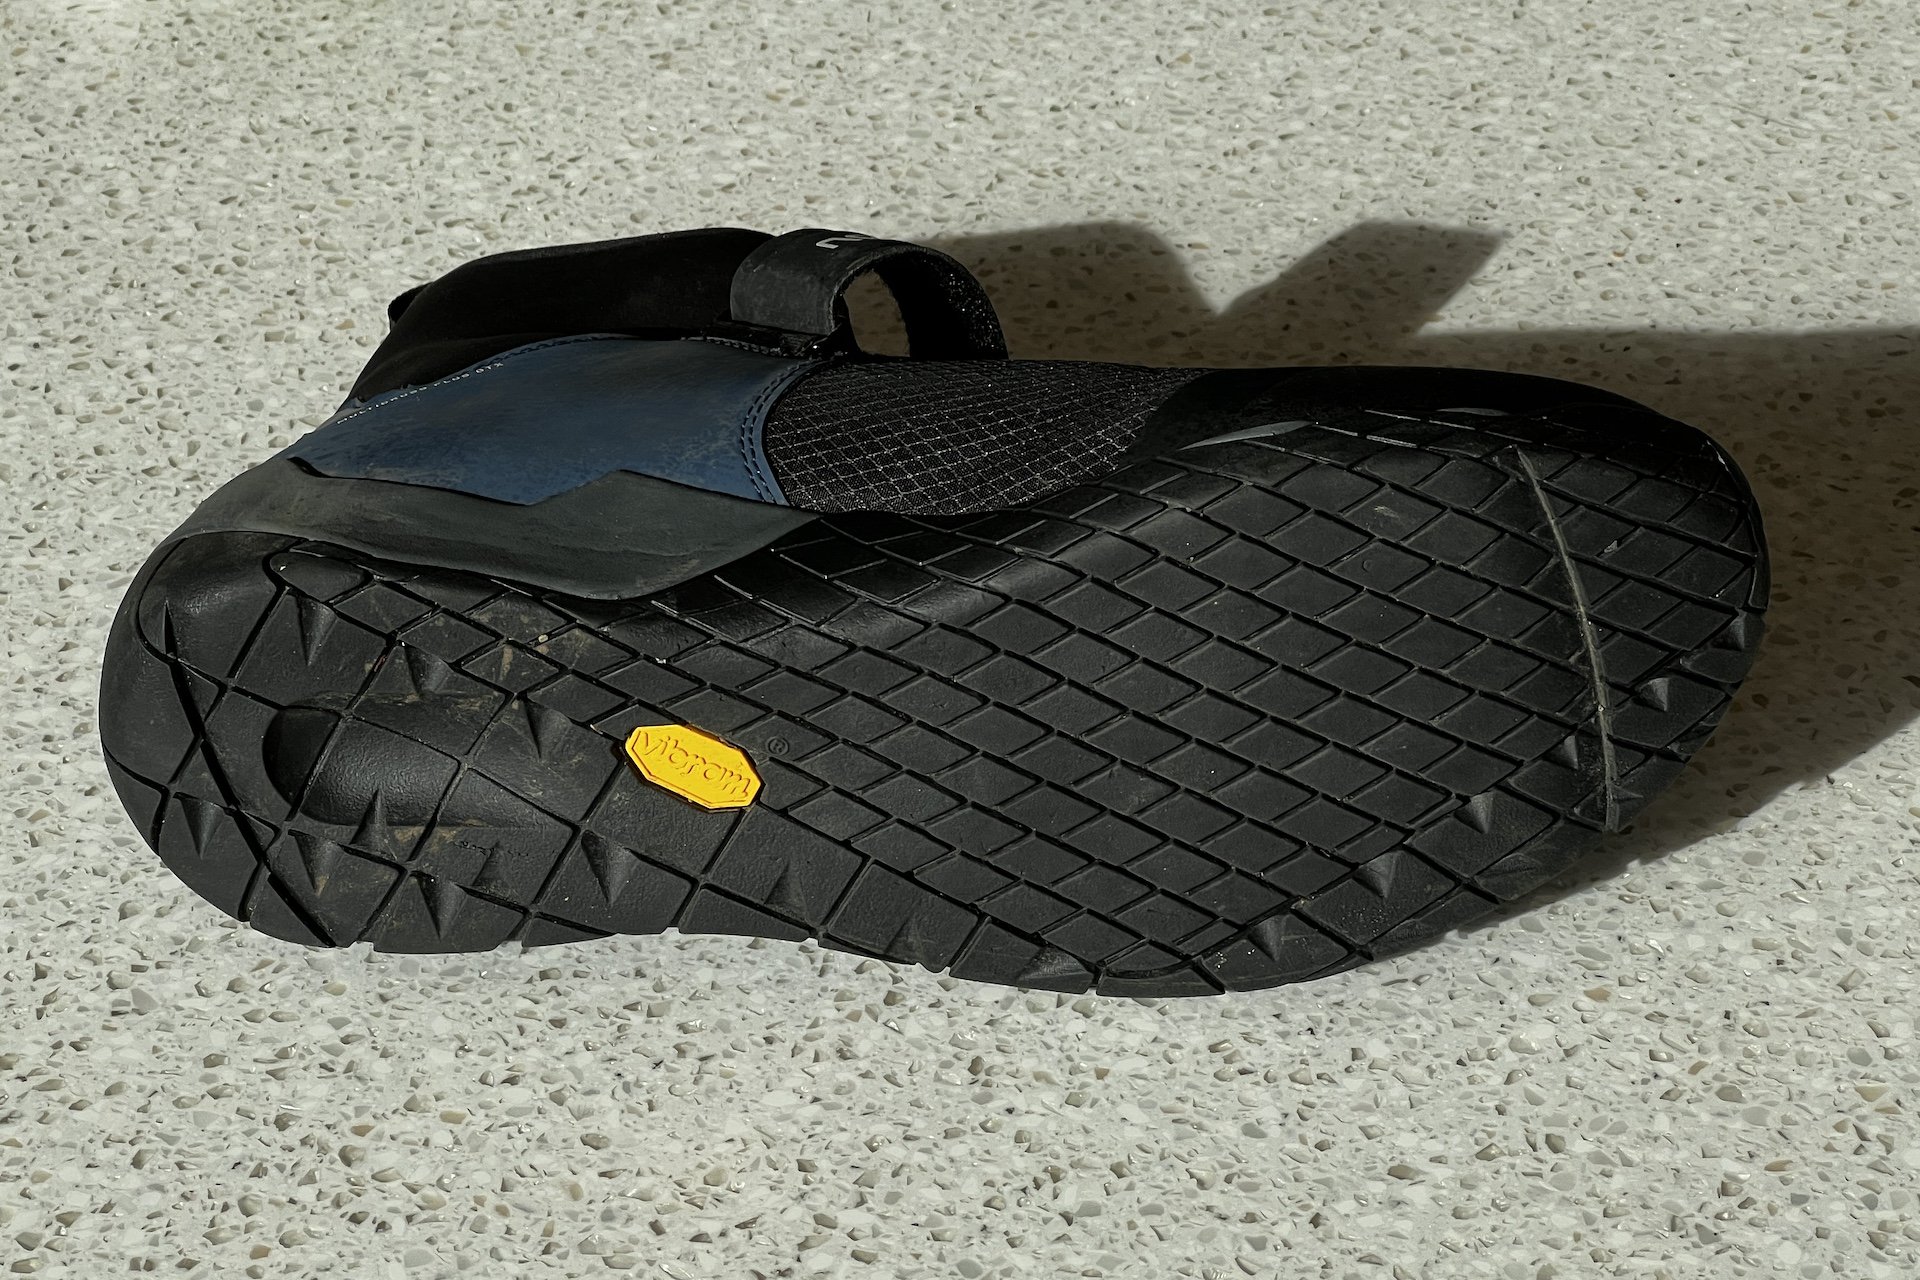 Northwave Mutlicross GTX flat pedal shoes 16